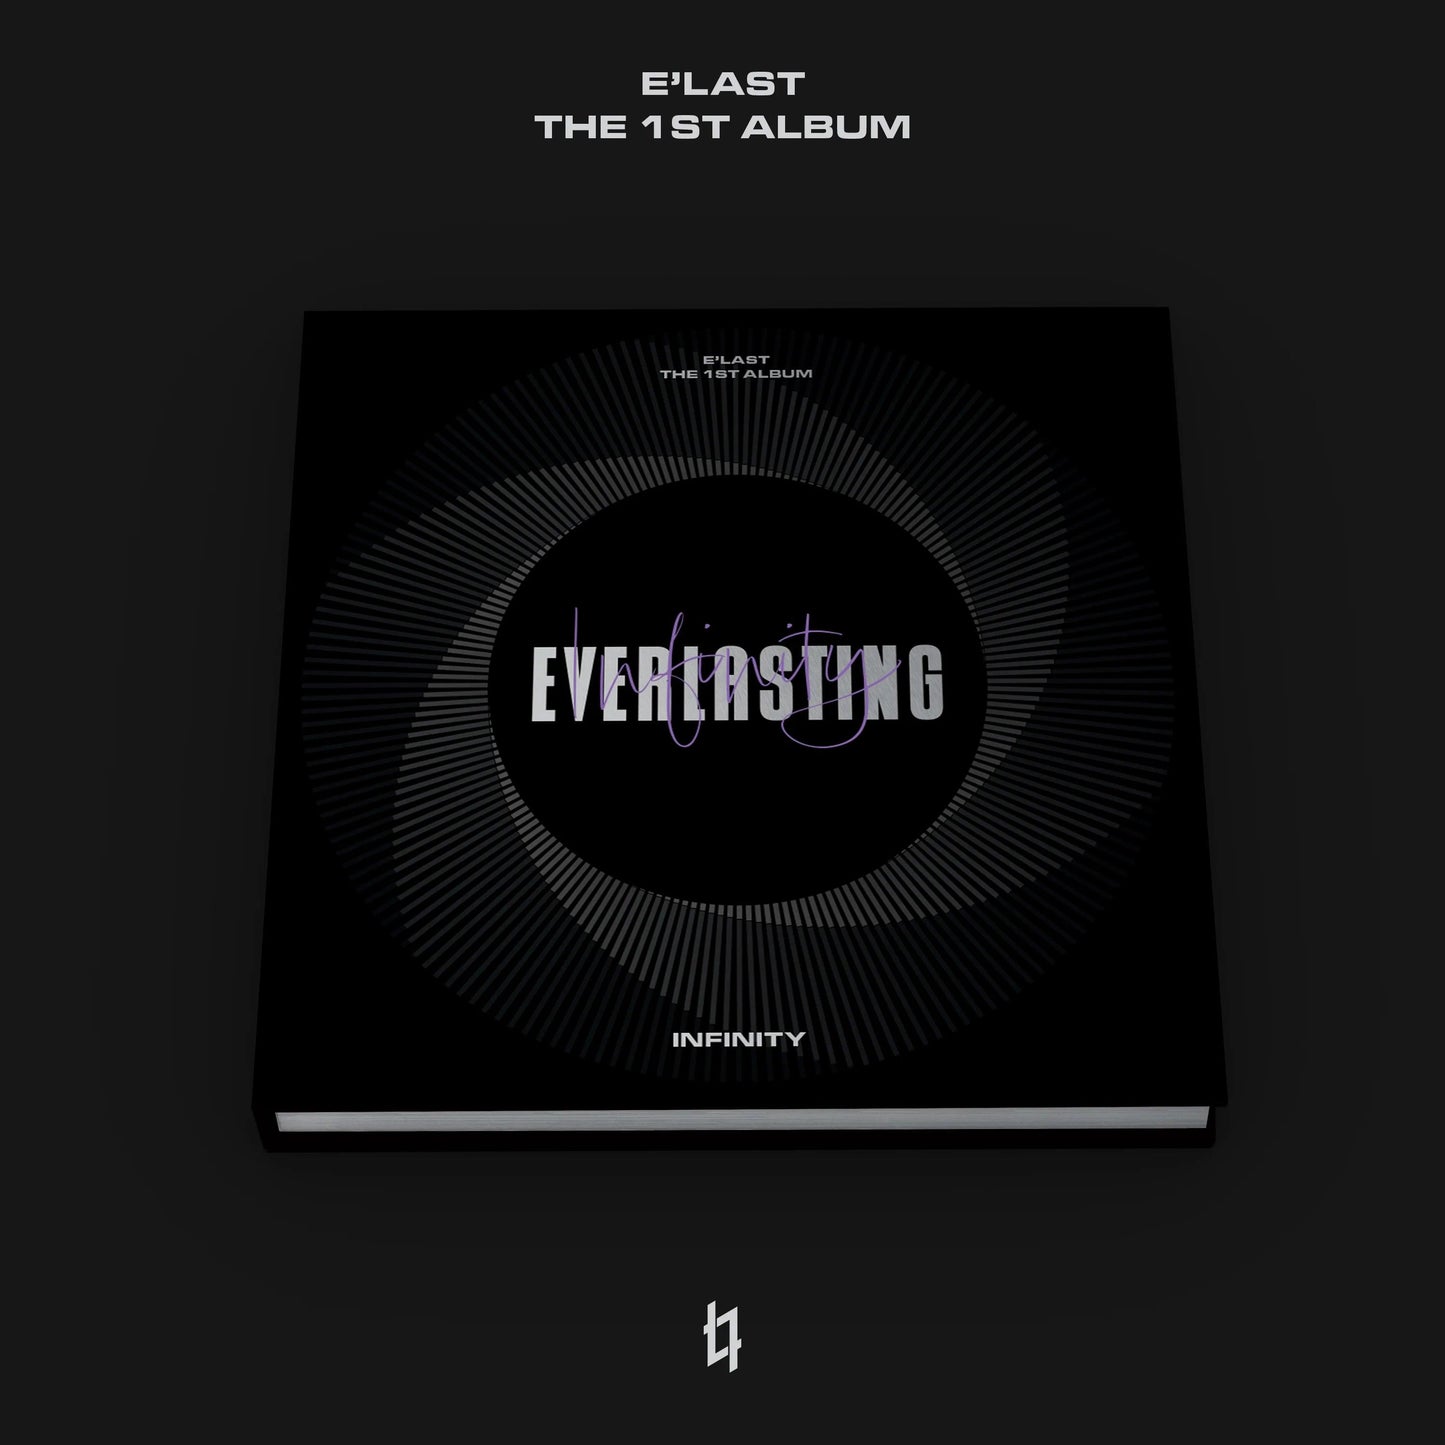 (SOBREPEDIDO) E’LAST - THE 1ST ALBUM [EVERLASTING] - K-POP WORLD